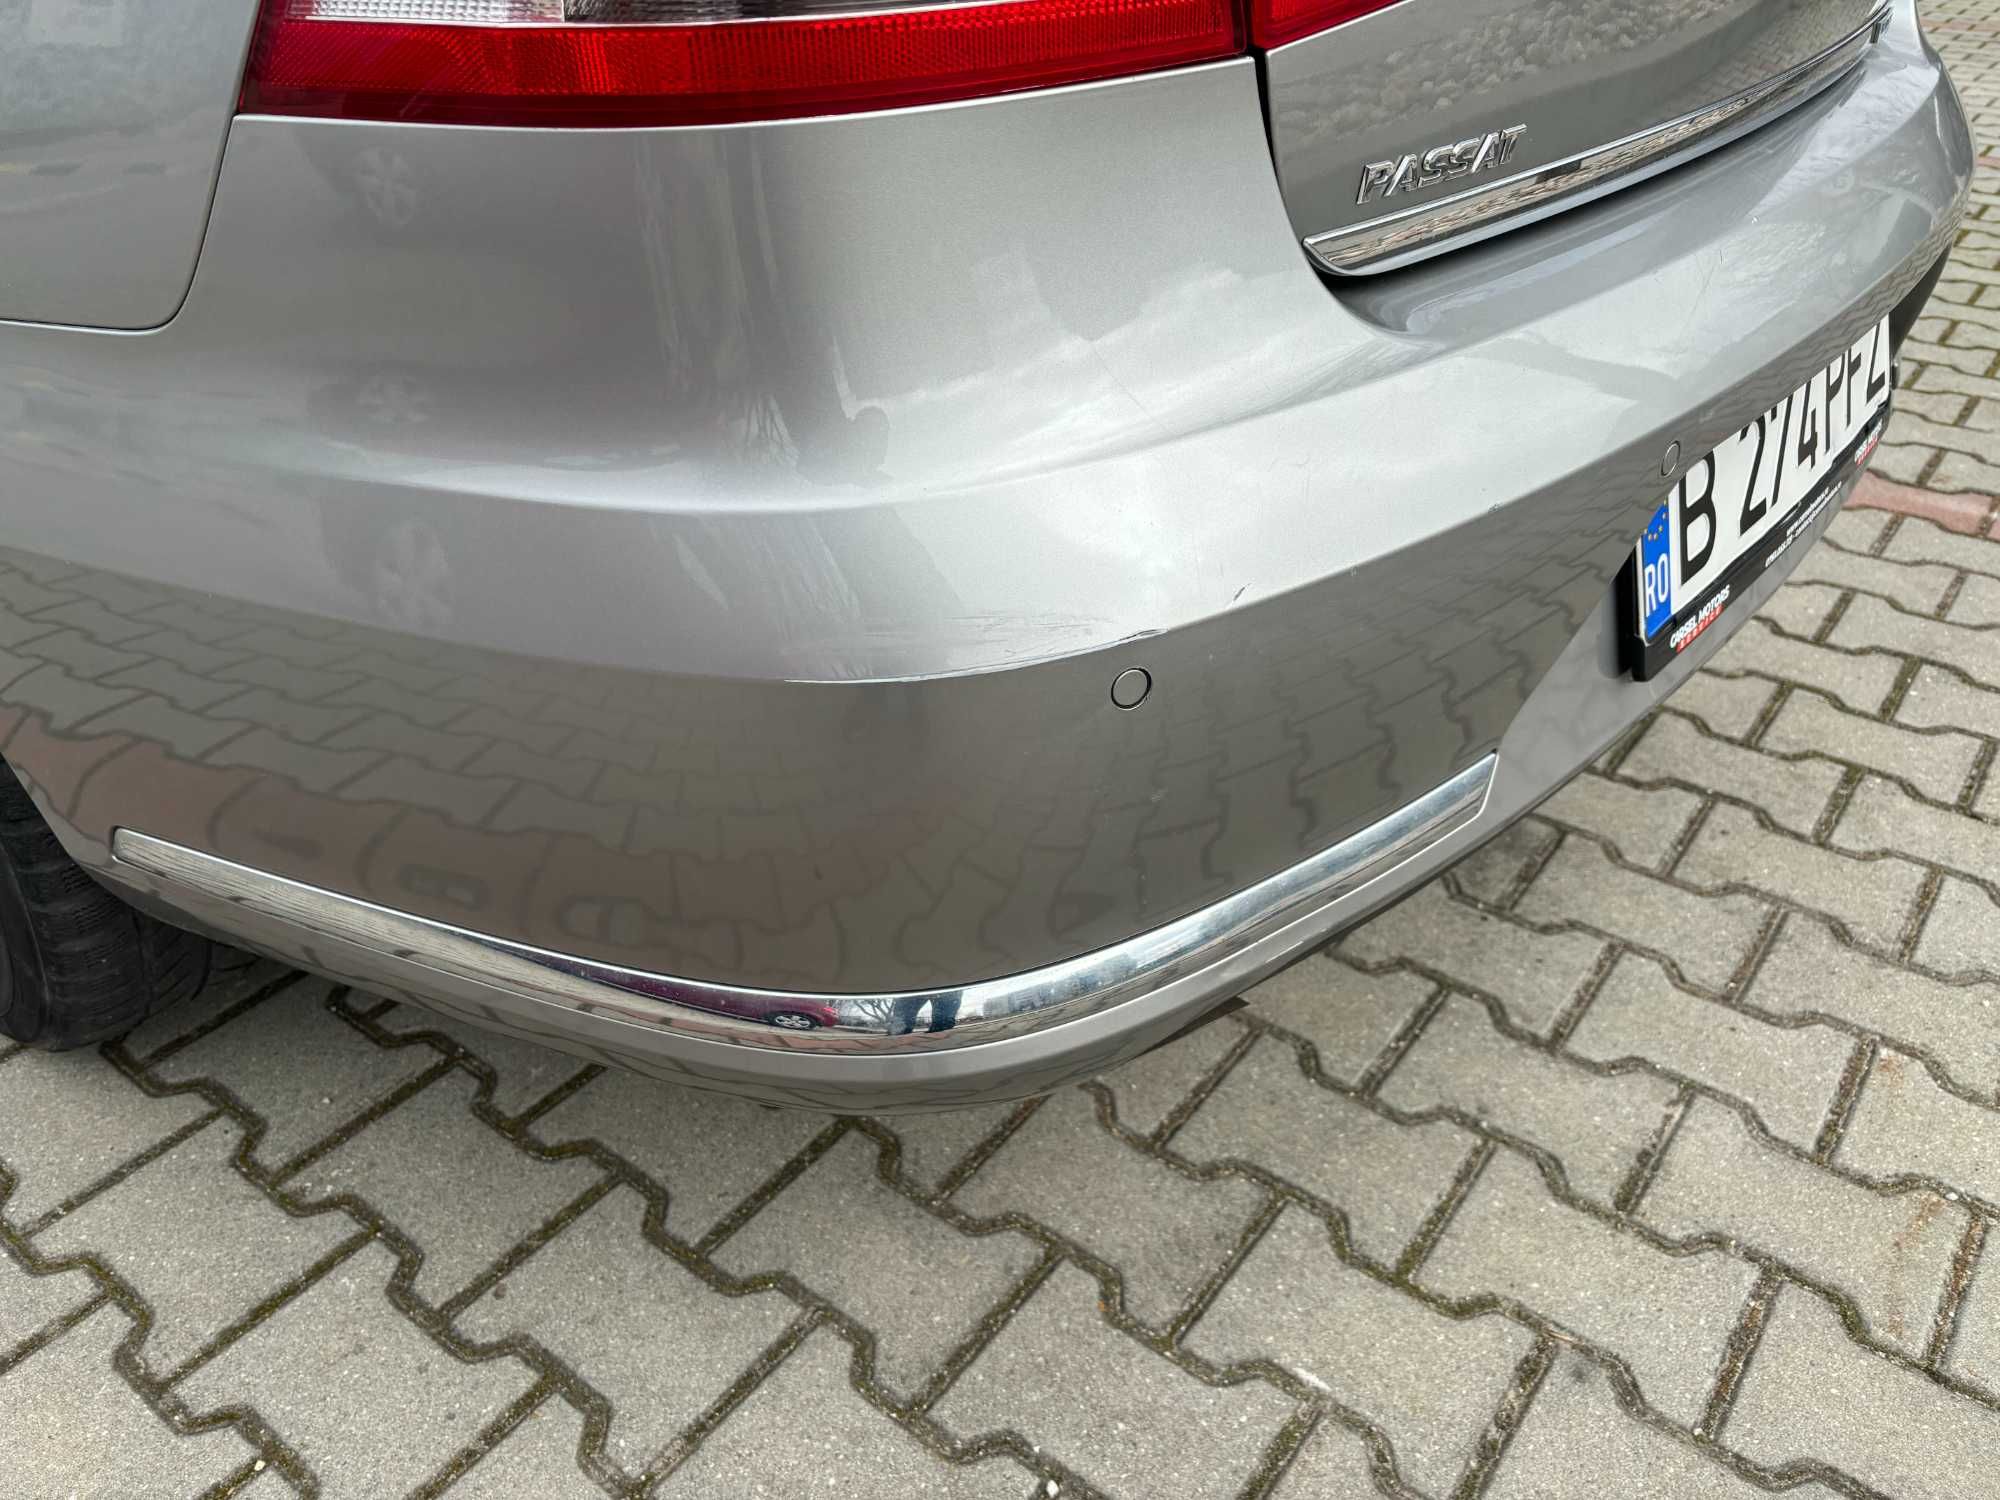 VW Passat 2014 /144.000 km